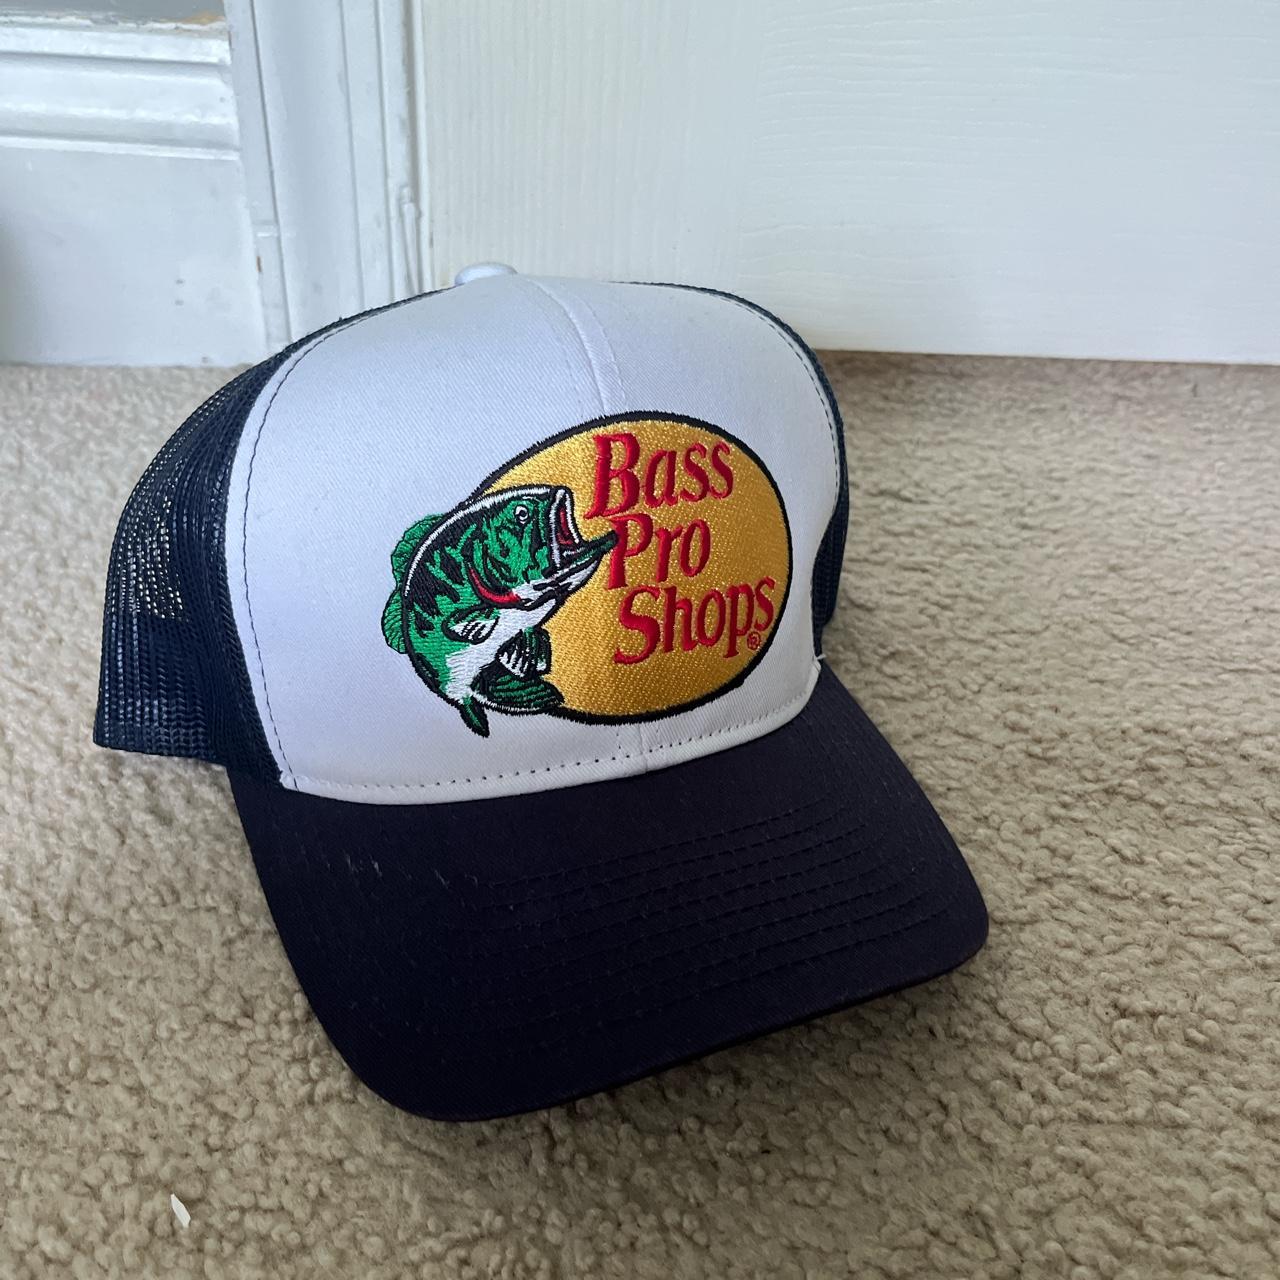 Bass Pro Shops hat - Depop